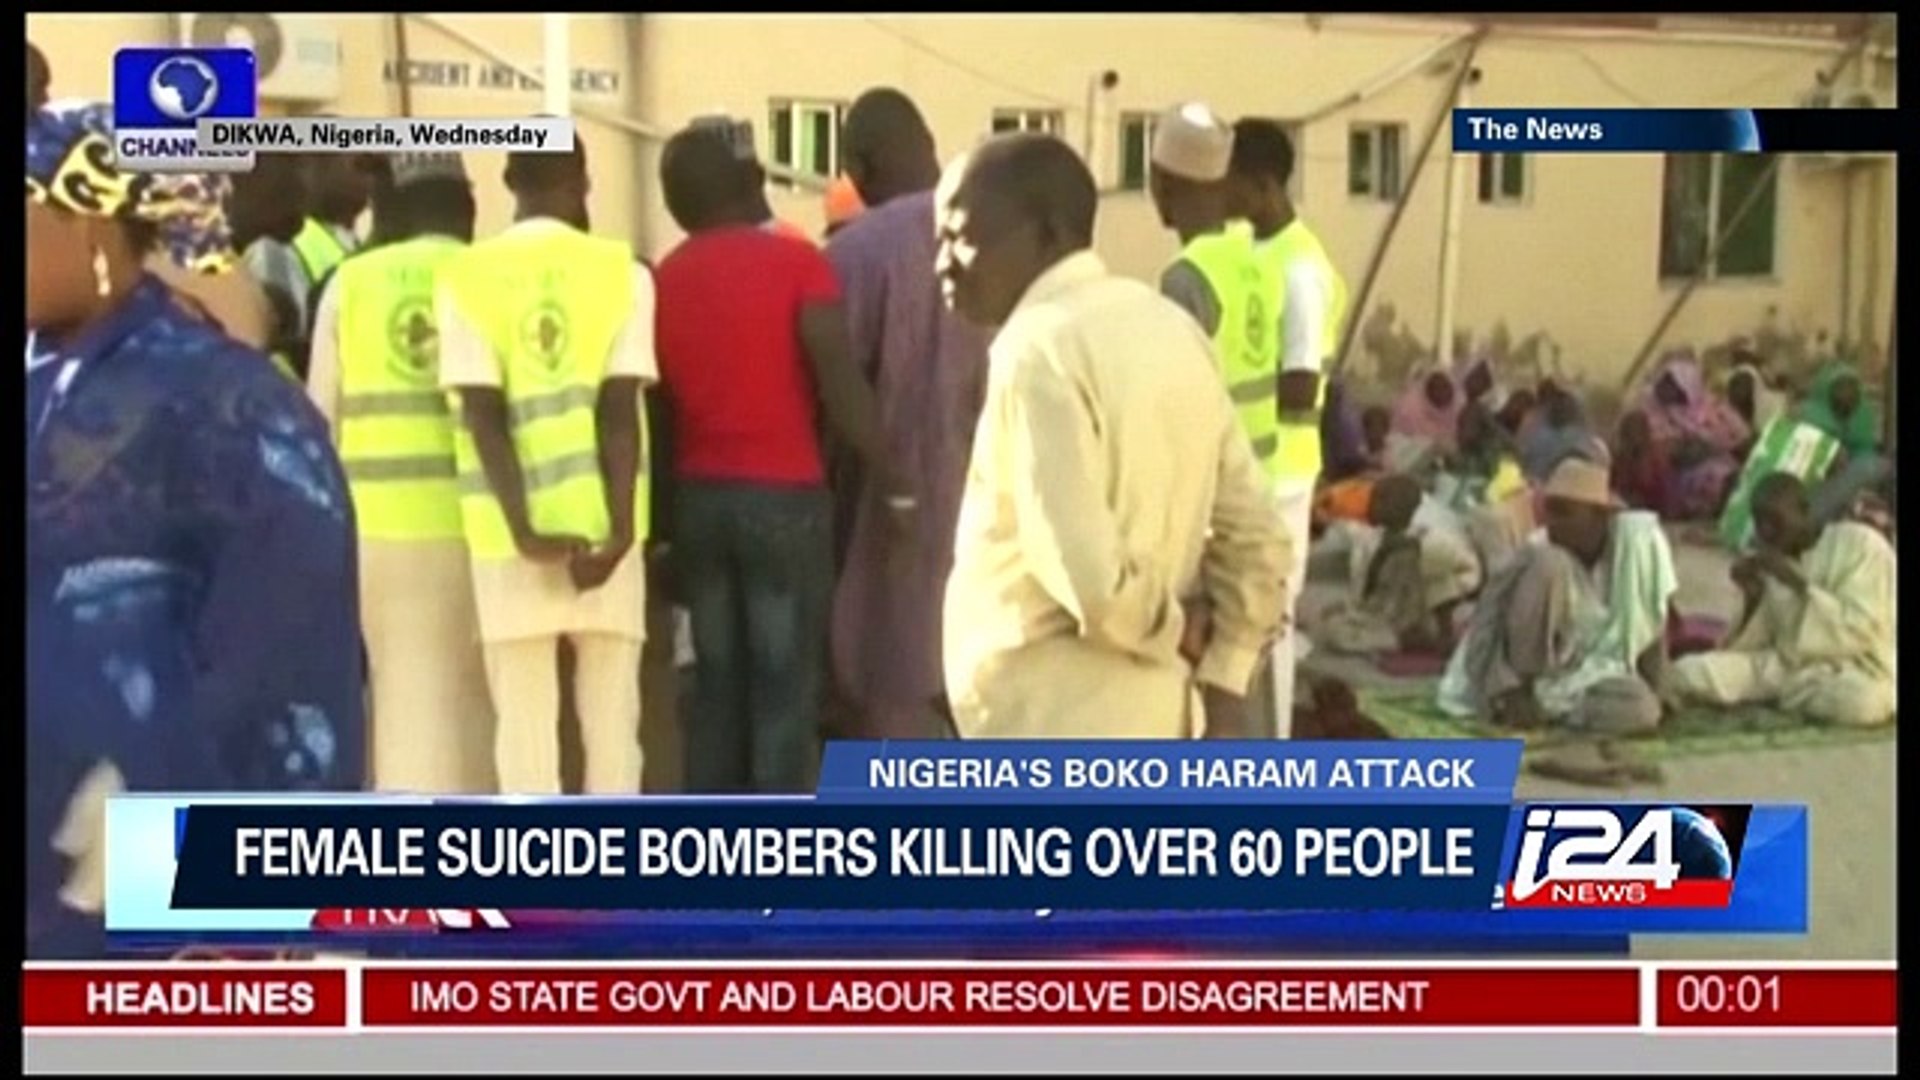 Nigeria : female suicide bombers killing over 60 people